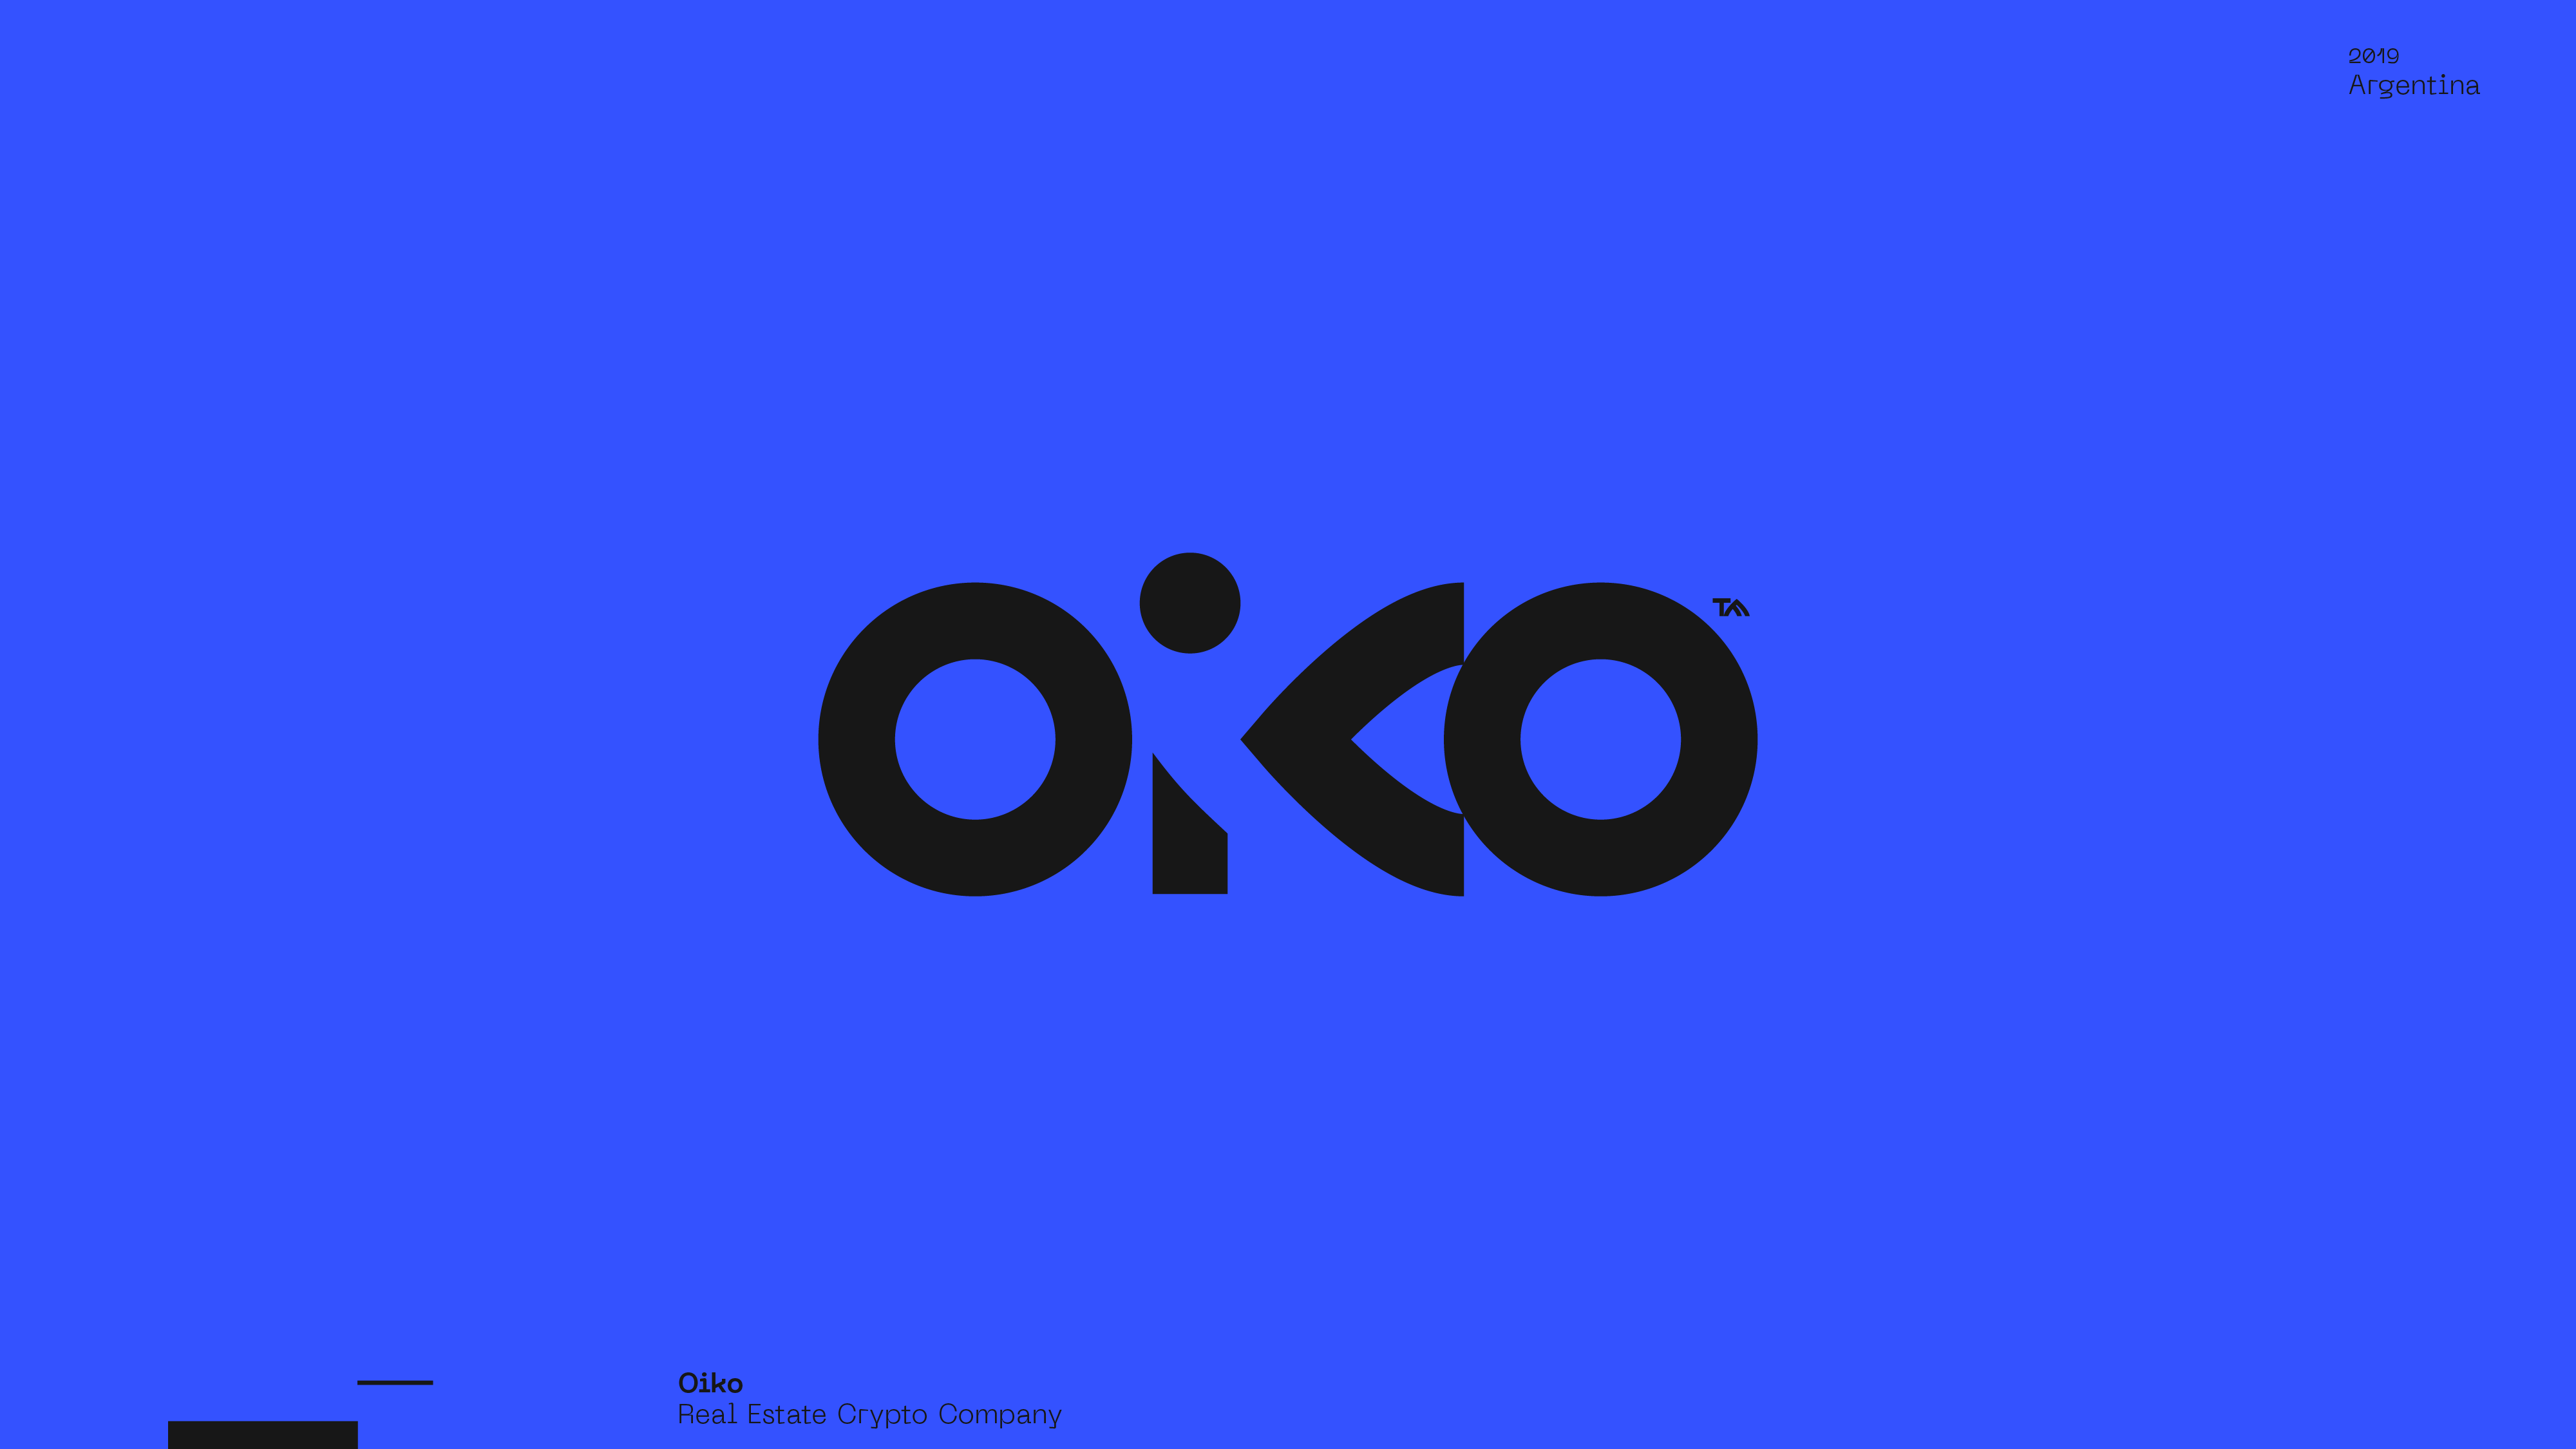 Guapo Design Studio by Esteban Ibarra Logofolio 2019 logo designer — Oiko